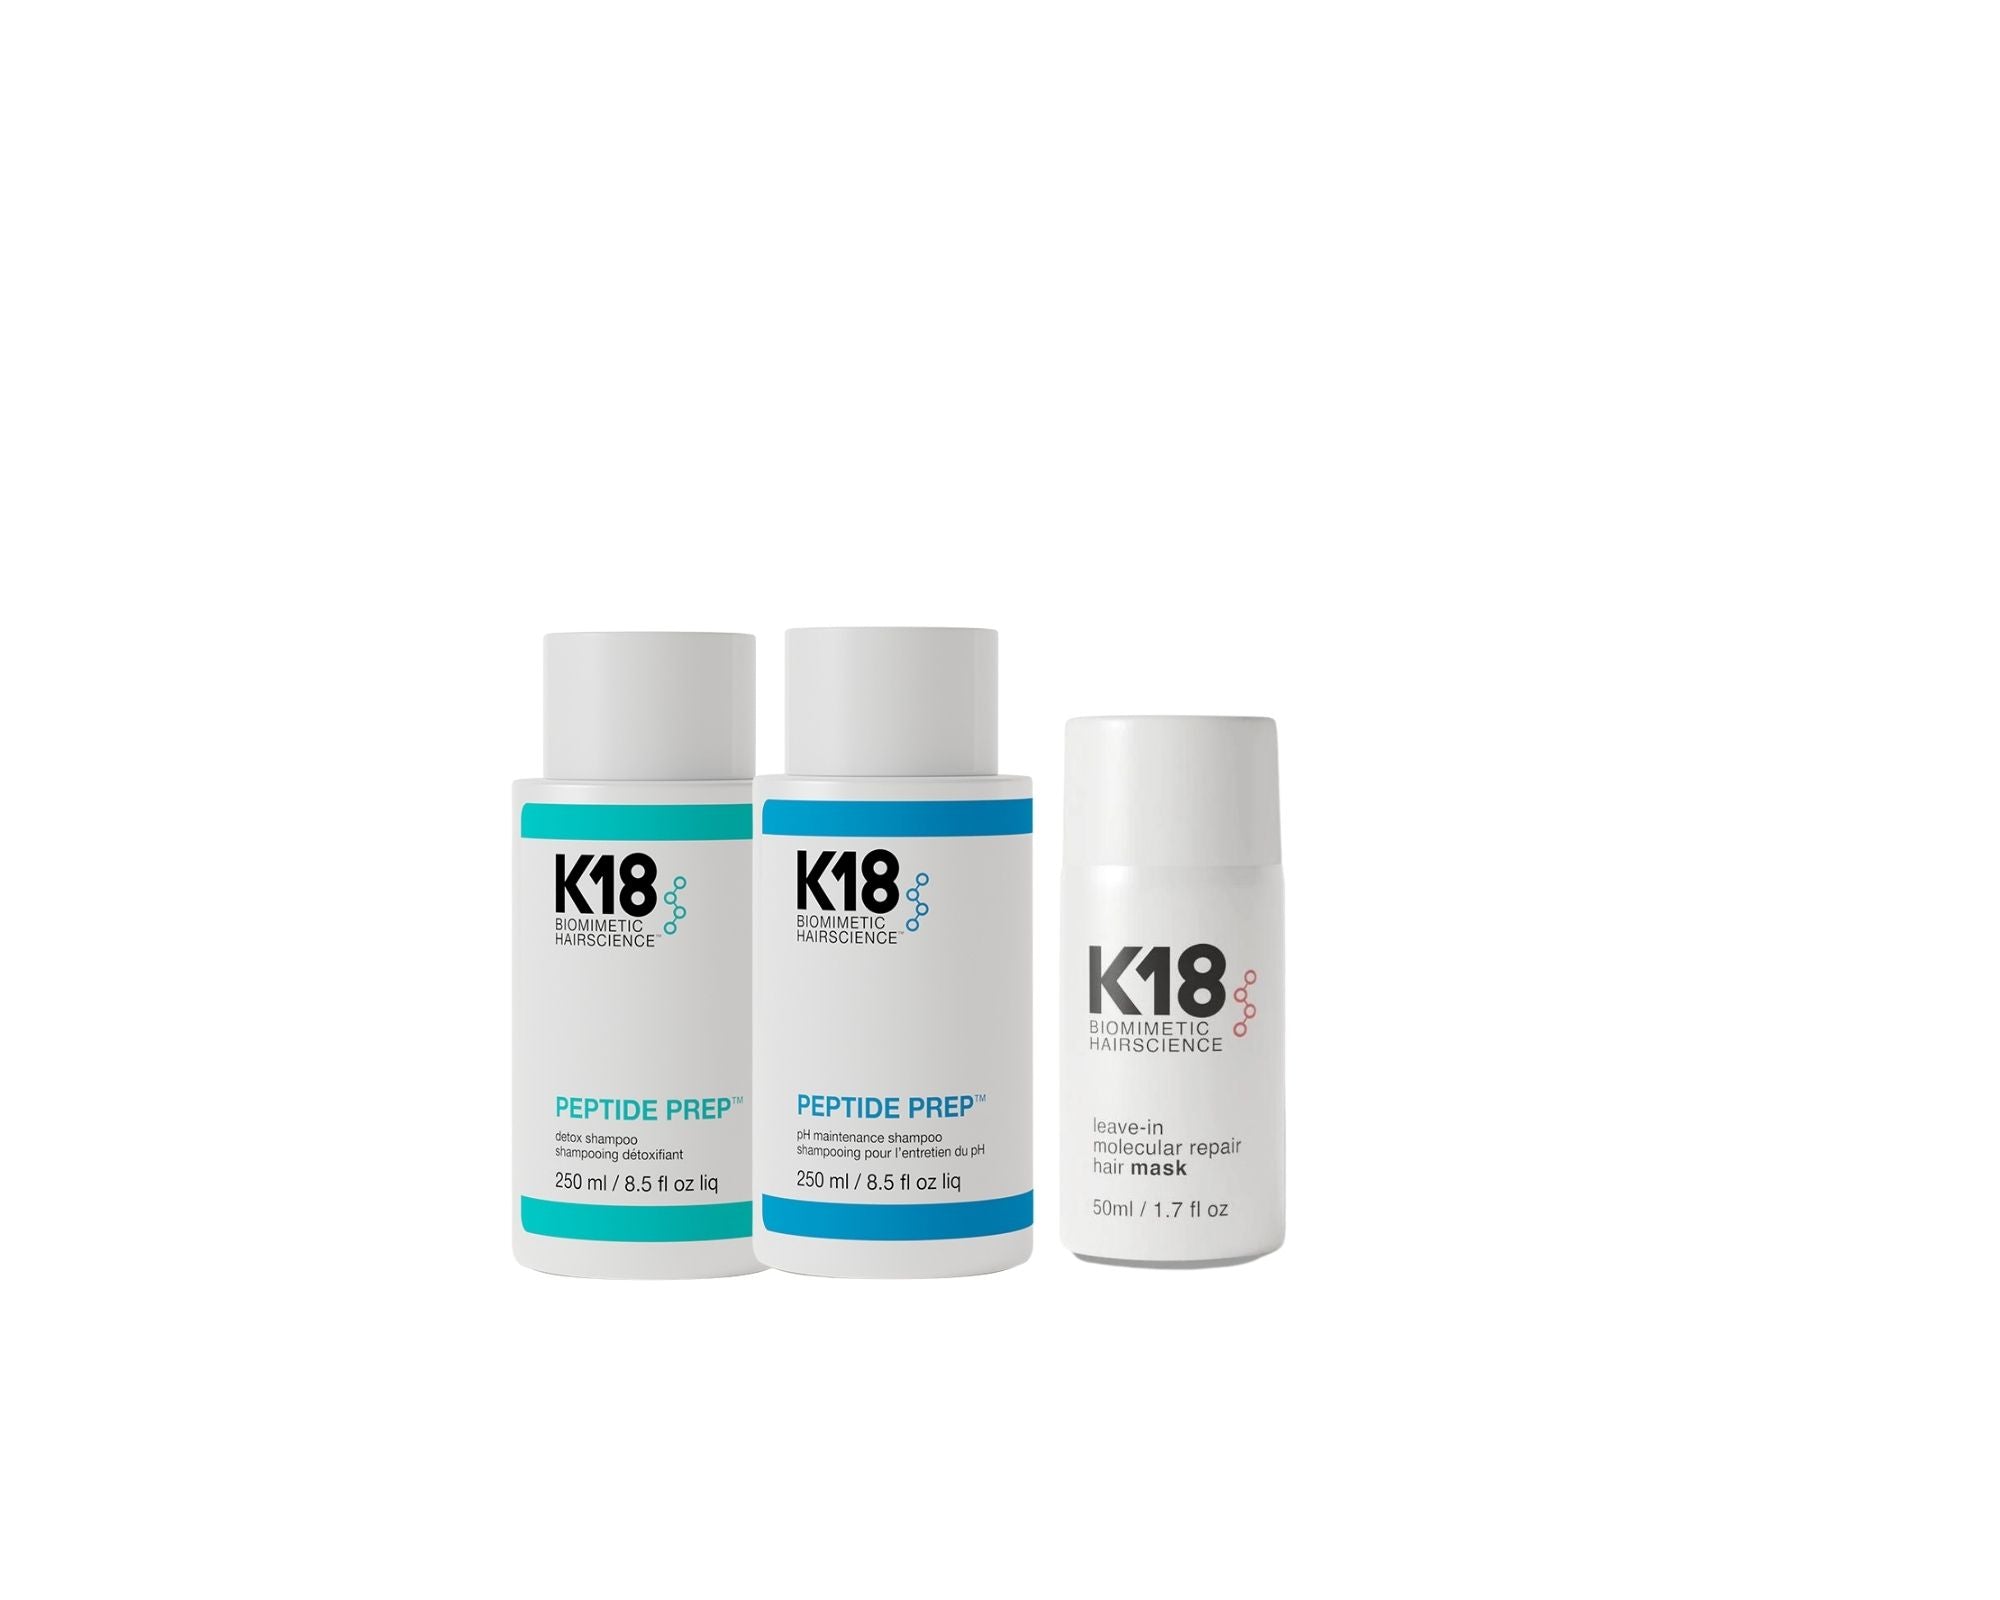 K18 PEPTIDE PREP detox shampoo 250ml, K18 PEPTIDE PREP pH maintenance shampoo 250ml & K18Hair Leave-in Molecular Repair Mask 50ml